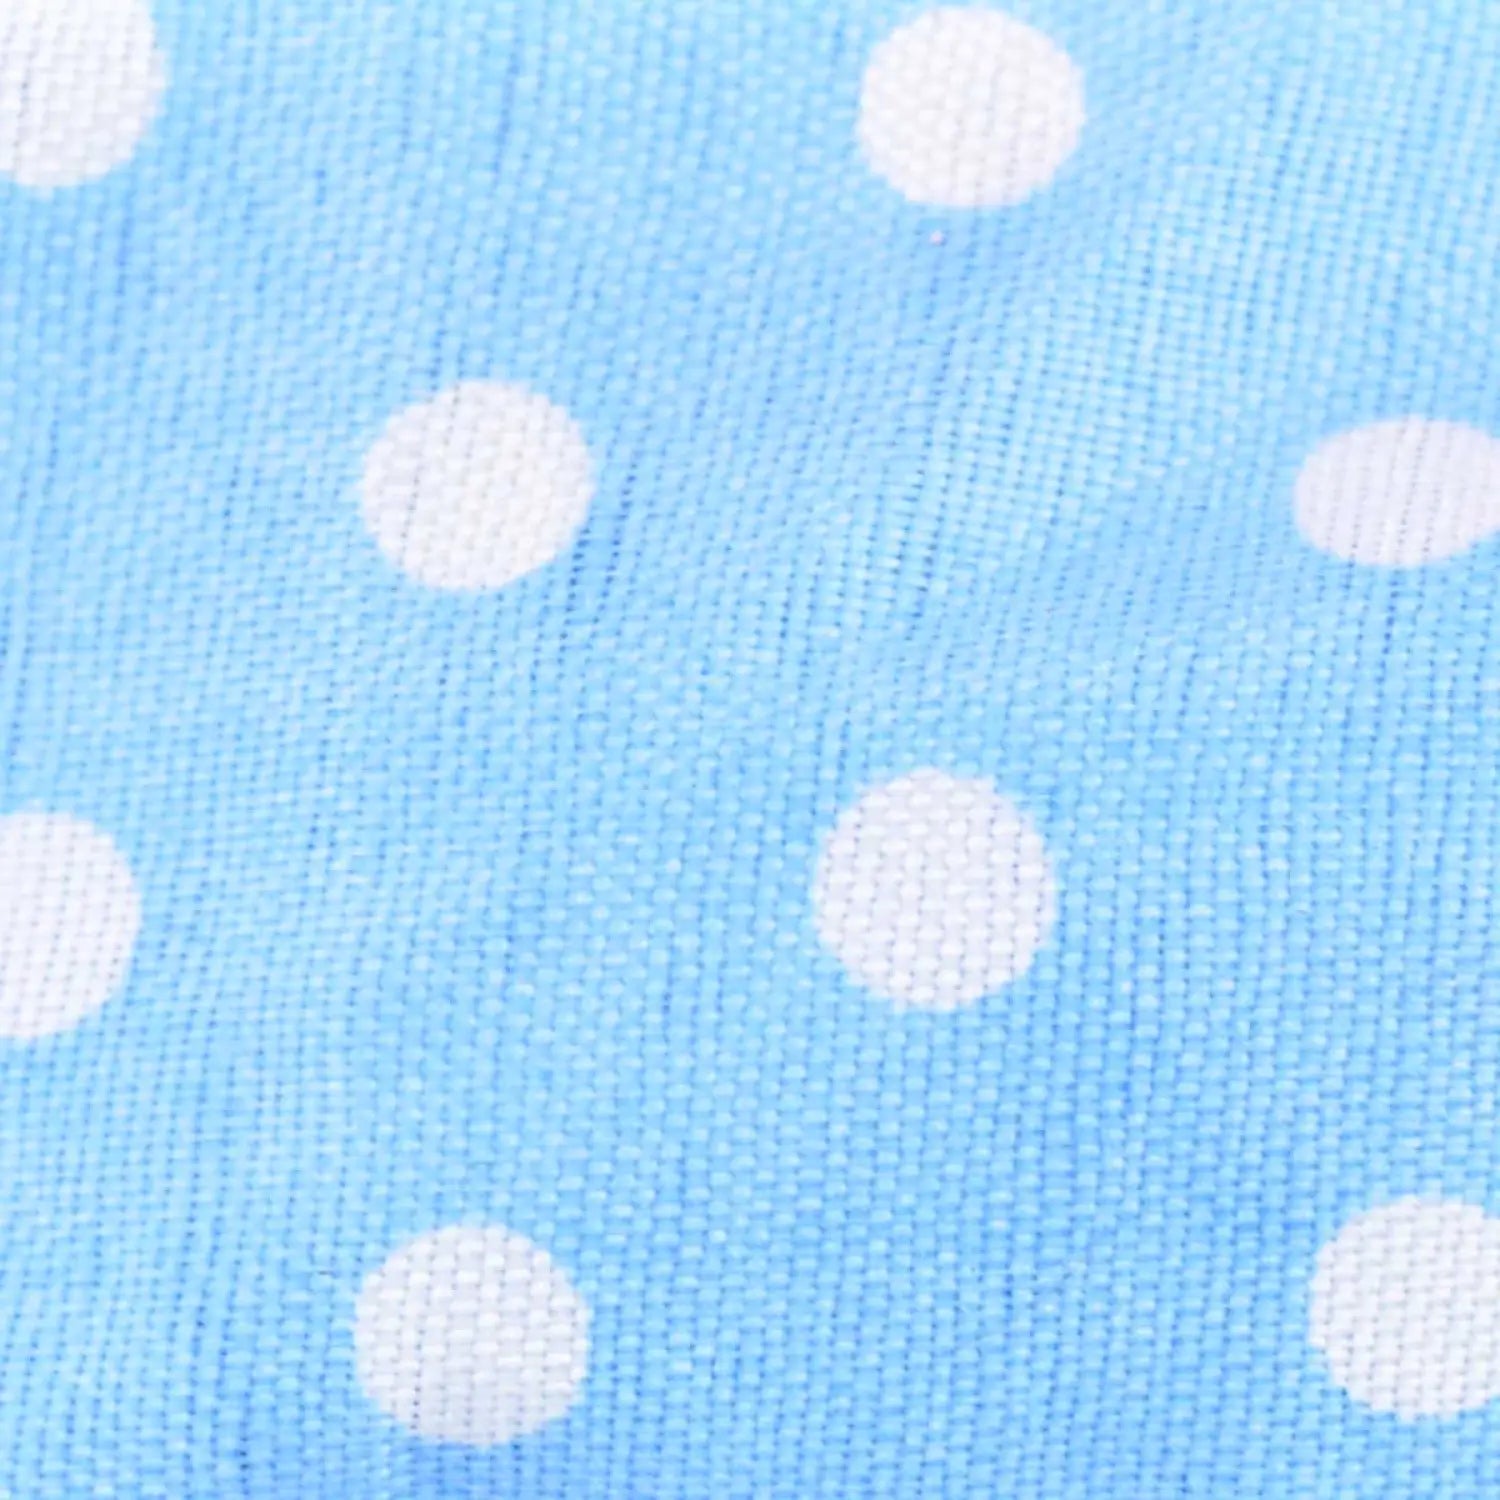 Blue and white polka dot fabric headband with bunny ears